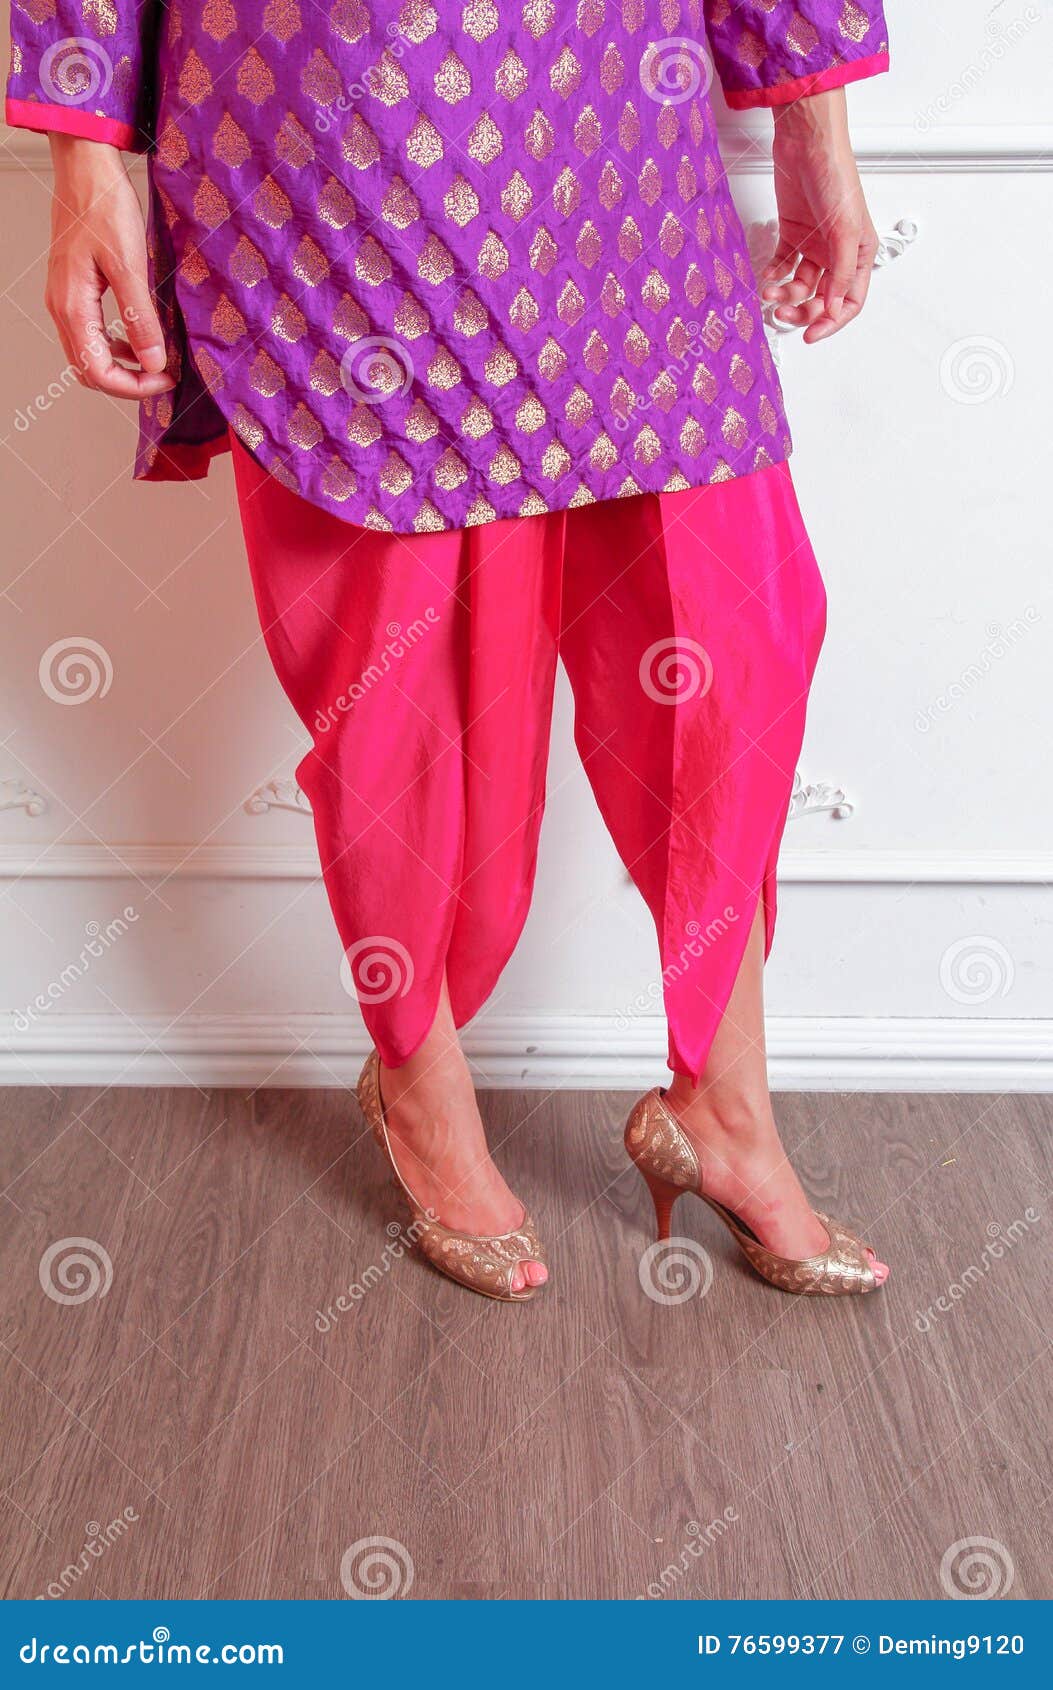 Indian Women Green Printed Long Gown 3 PCs Cotton Party Wear Dress | eBay